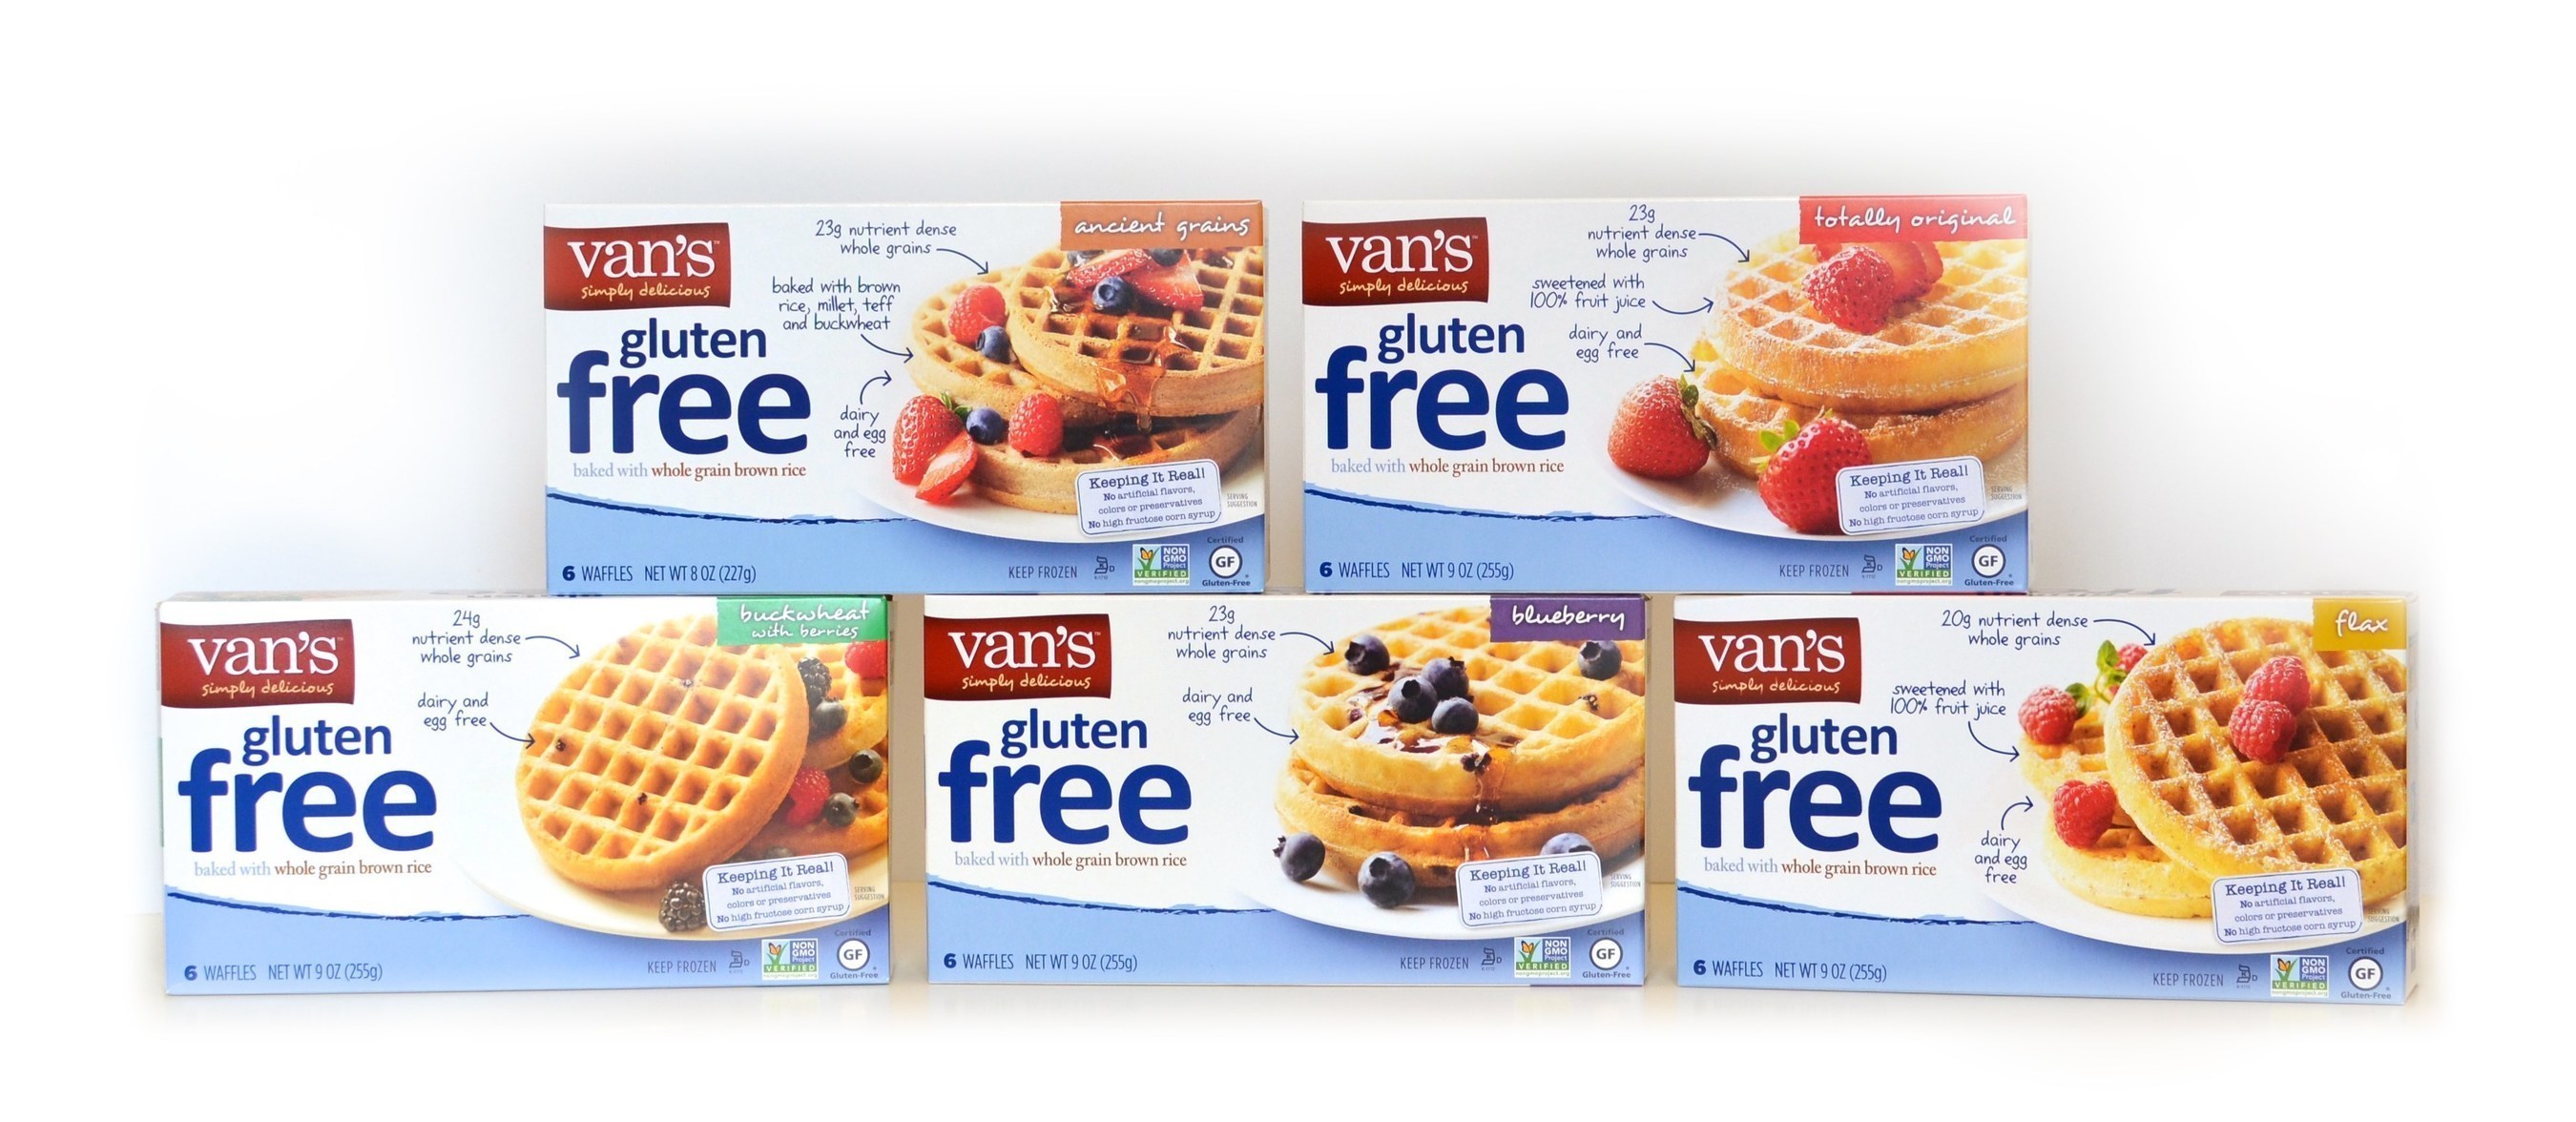 Van's Simply Delicious Gluten-Free Waffles